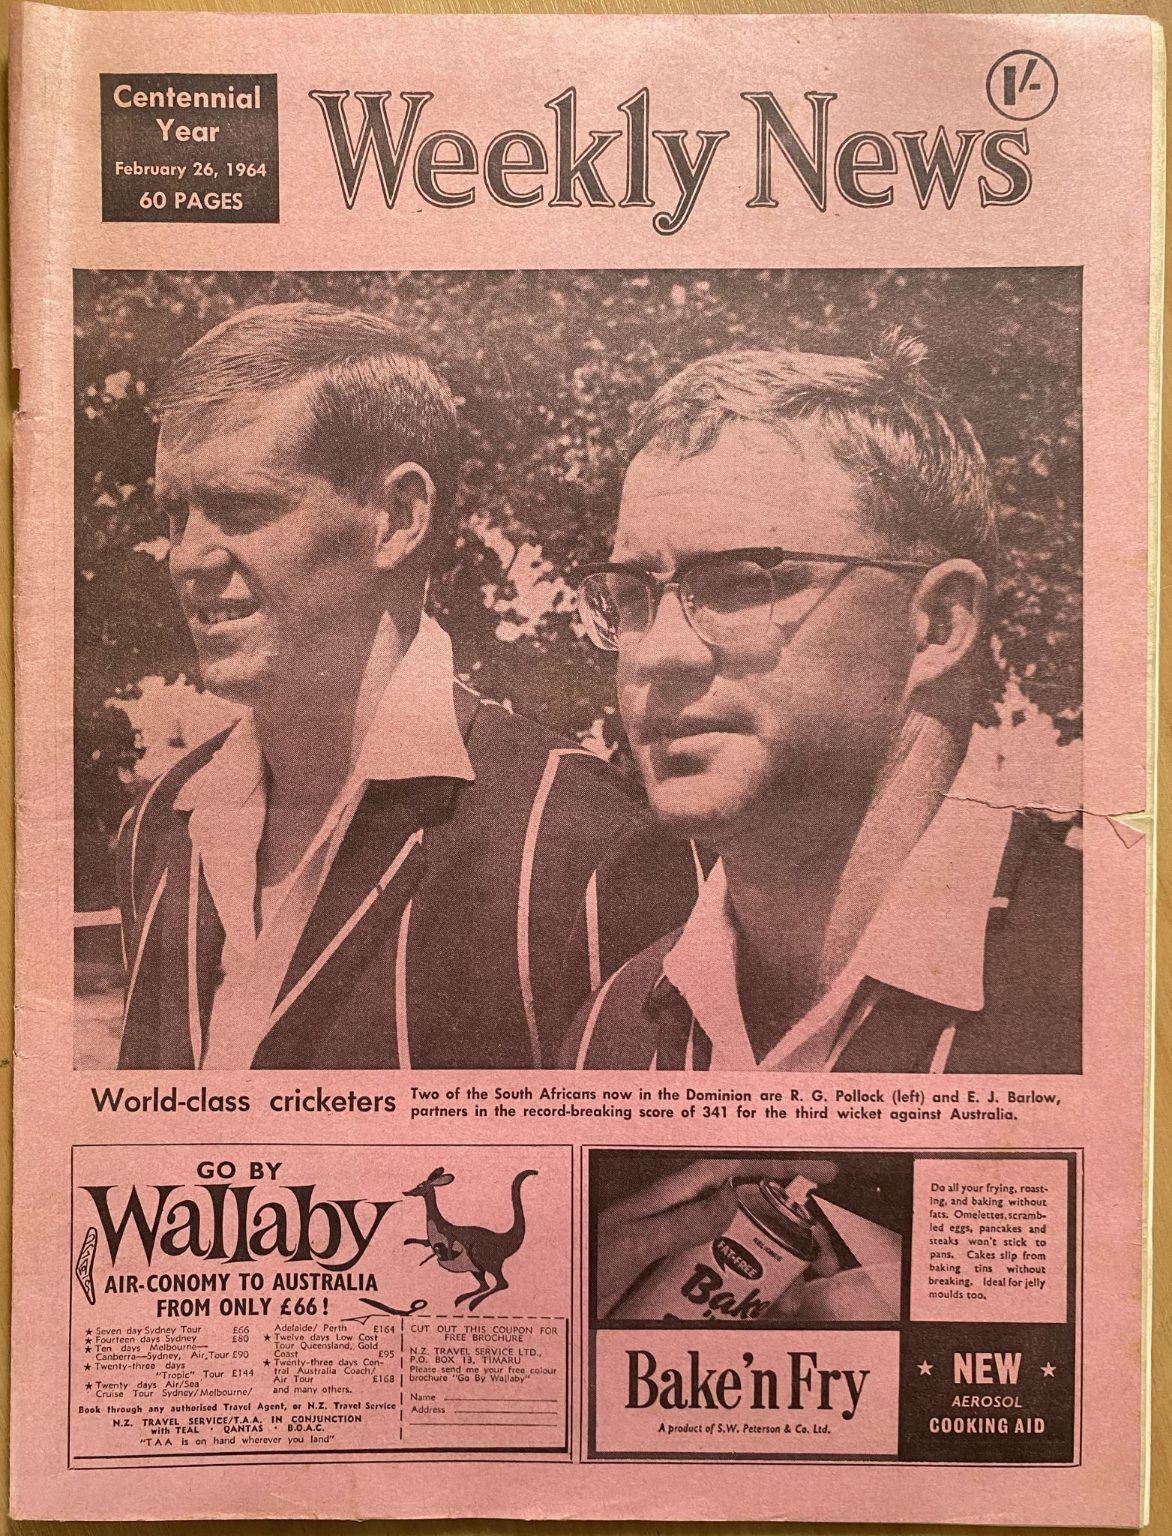 OLD NEWSPAPER: Weekly News, No. 5231, 26 February 1964